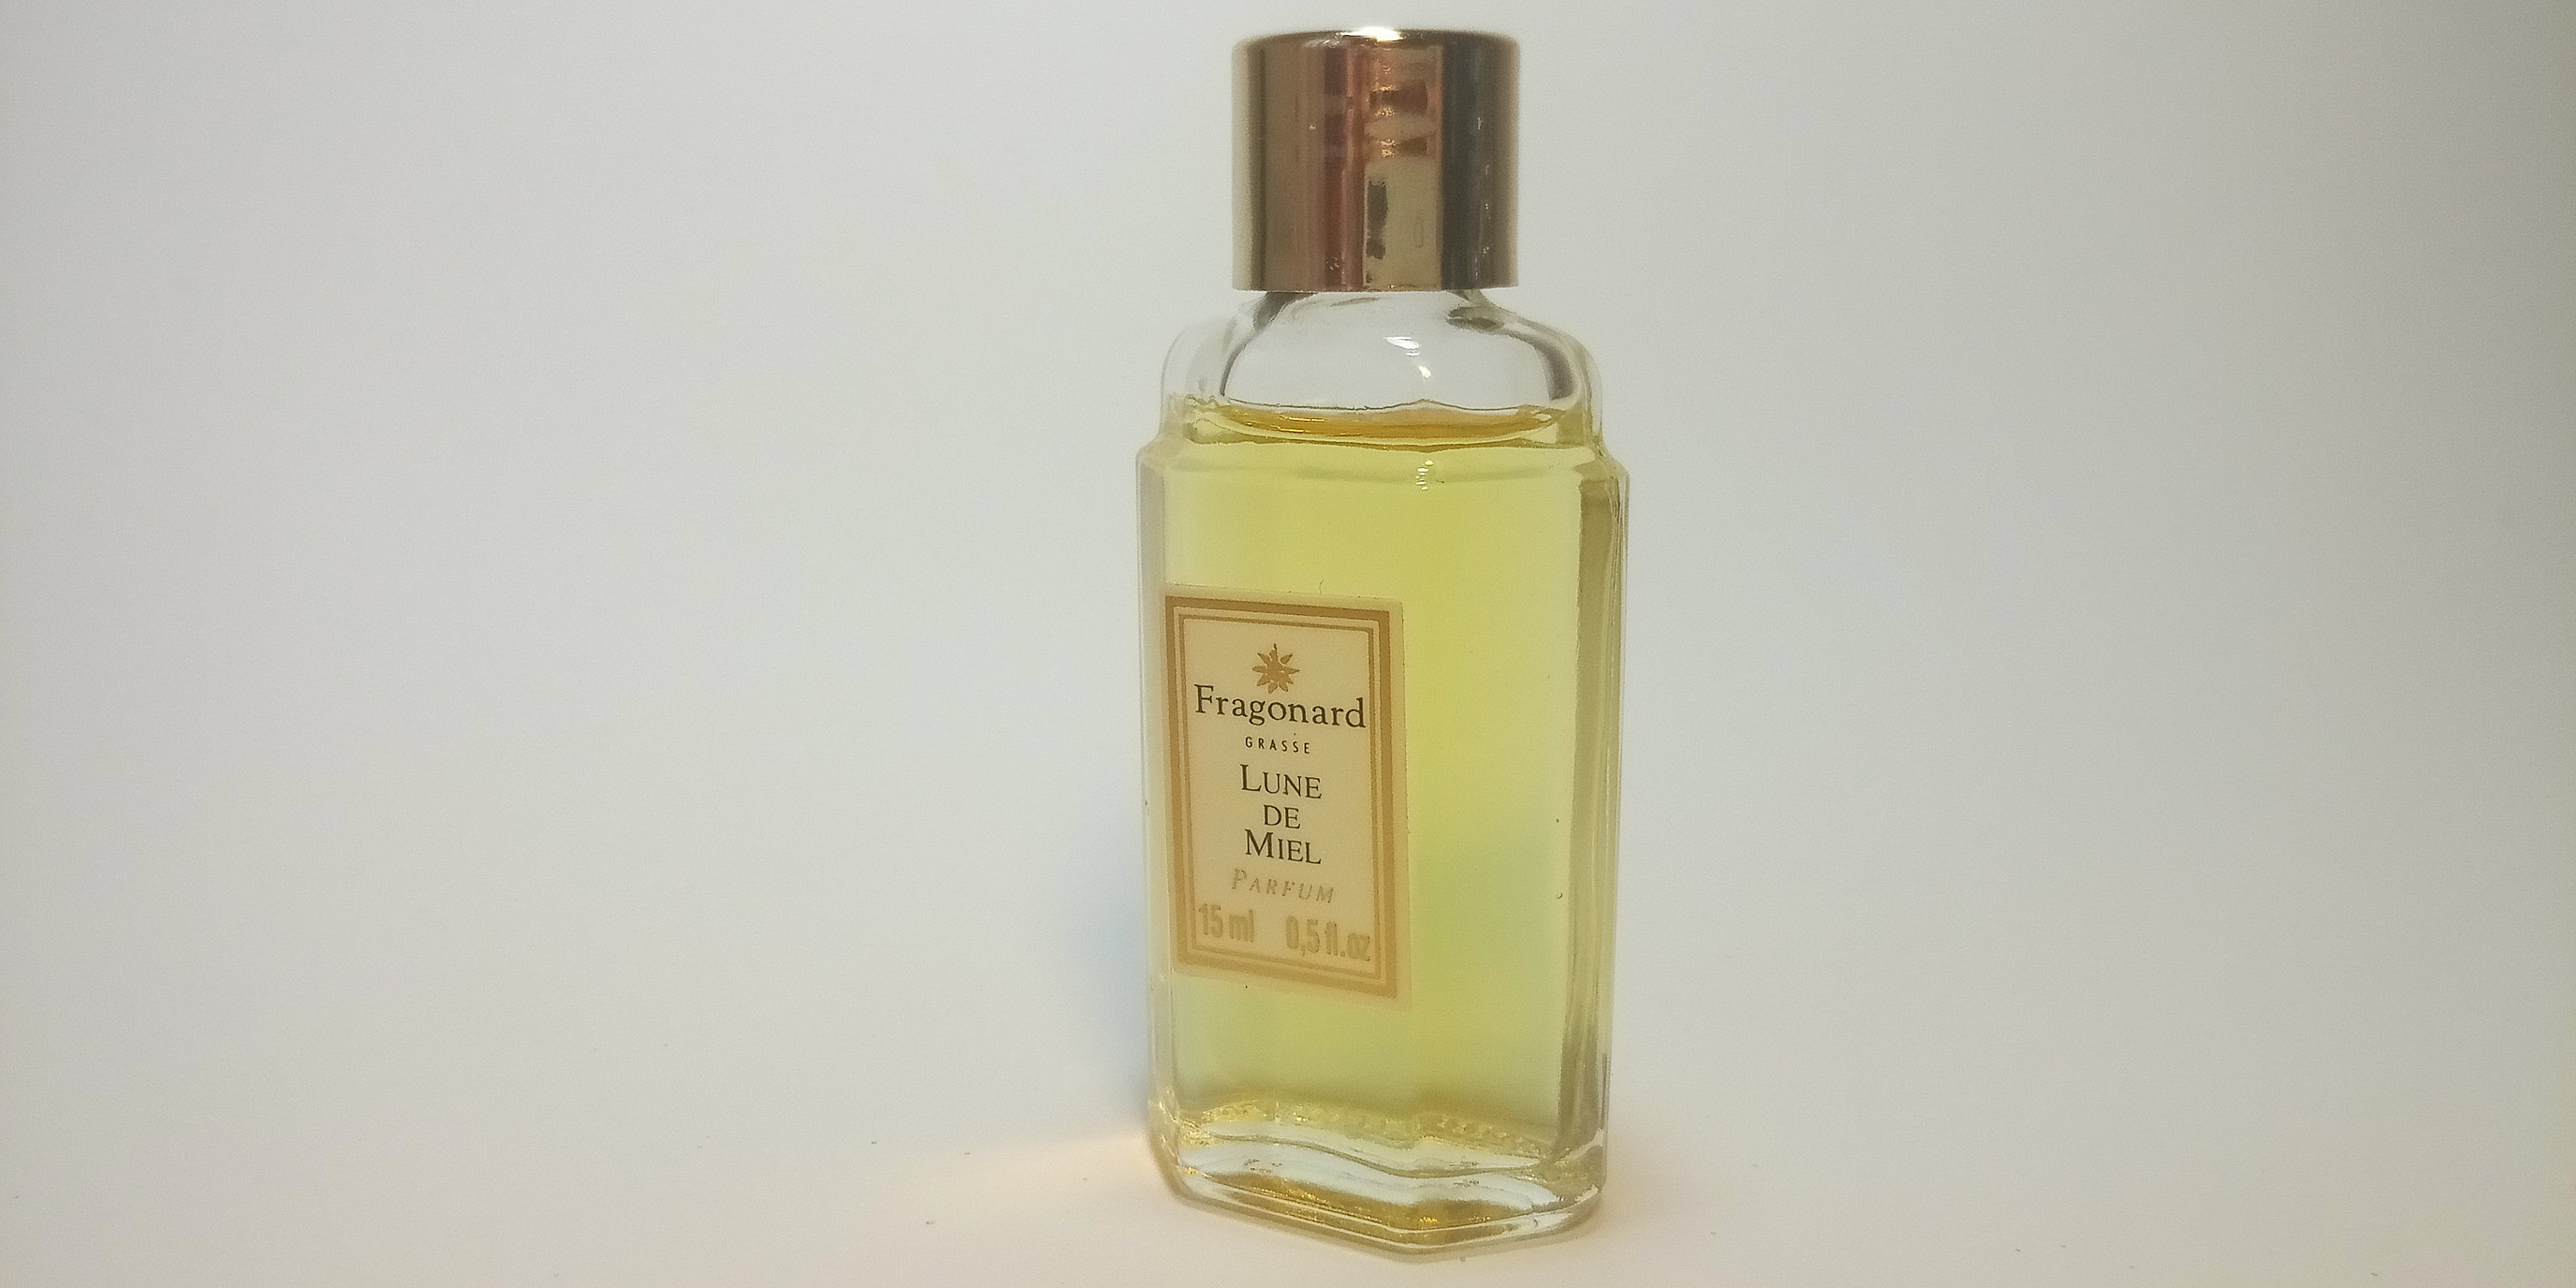 FRAGONARD Lune de Miel Fragonard 1991 Parfum 15 ml miniature | Etsy